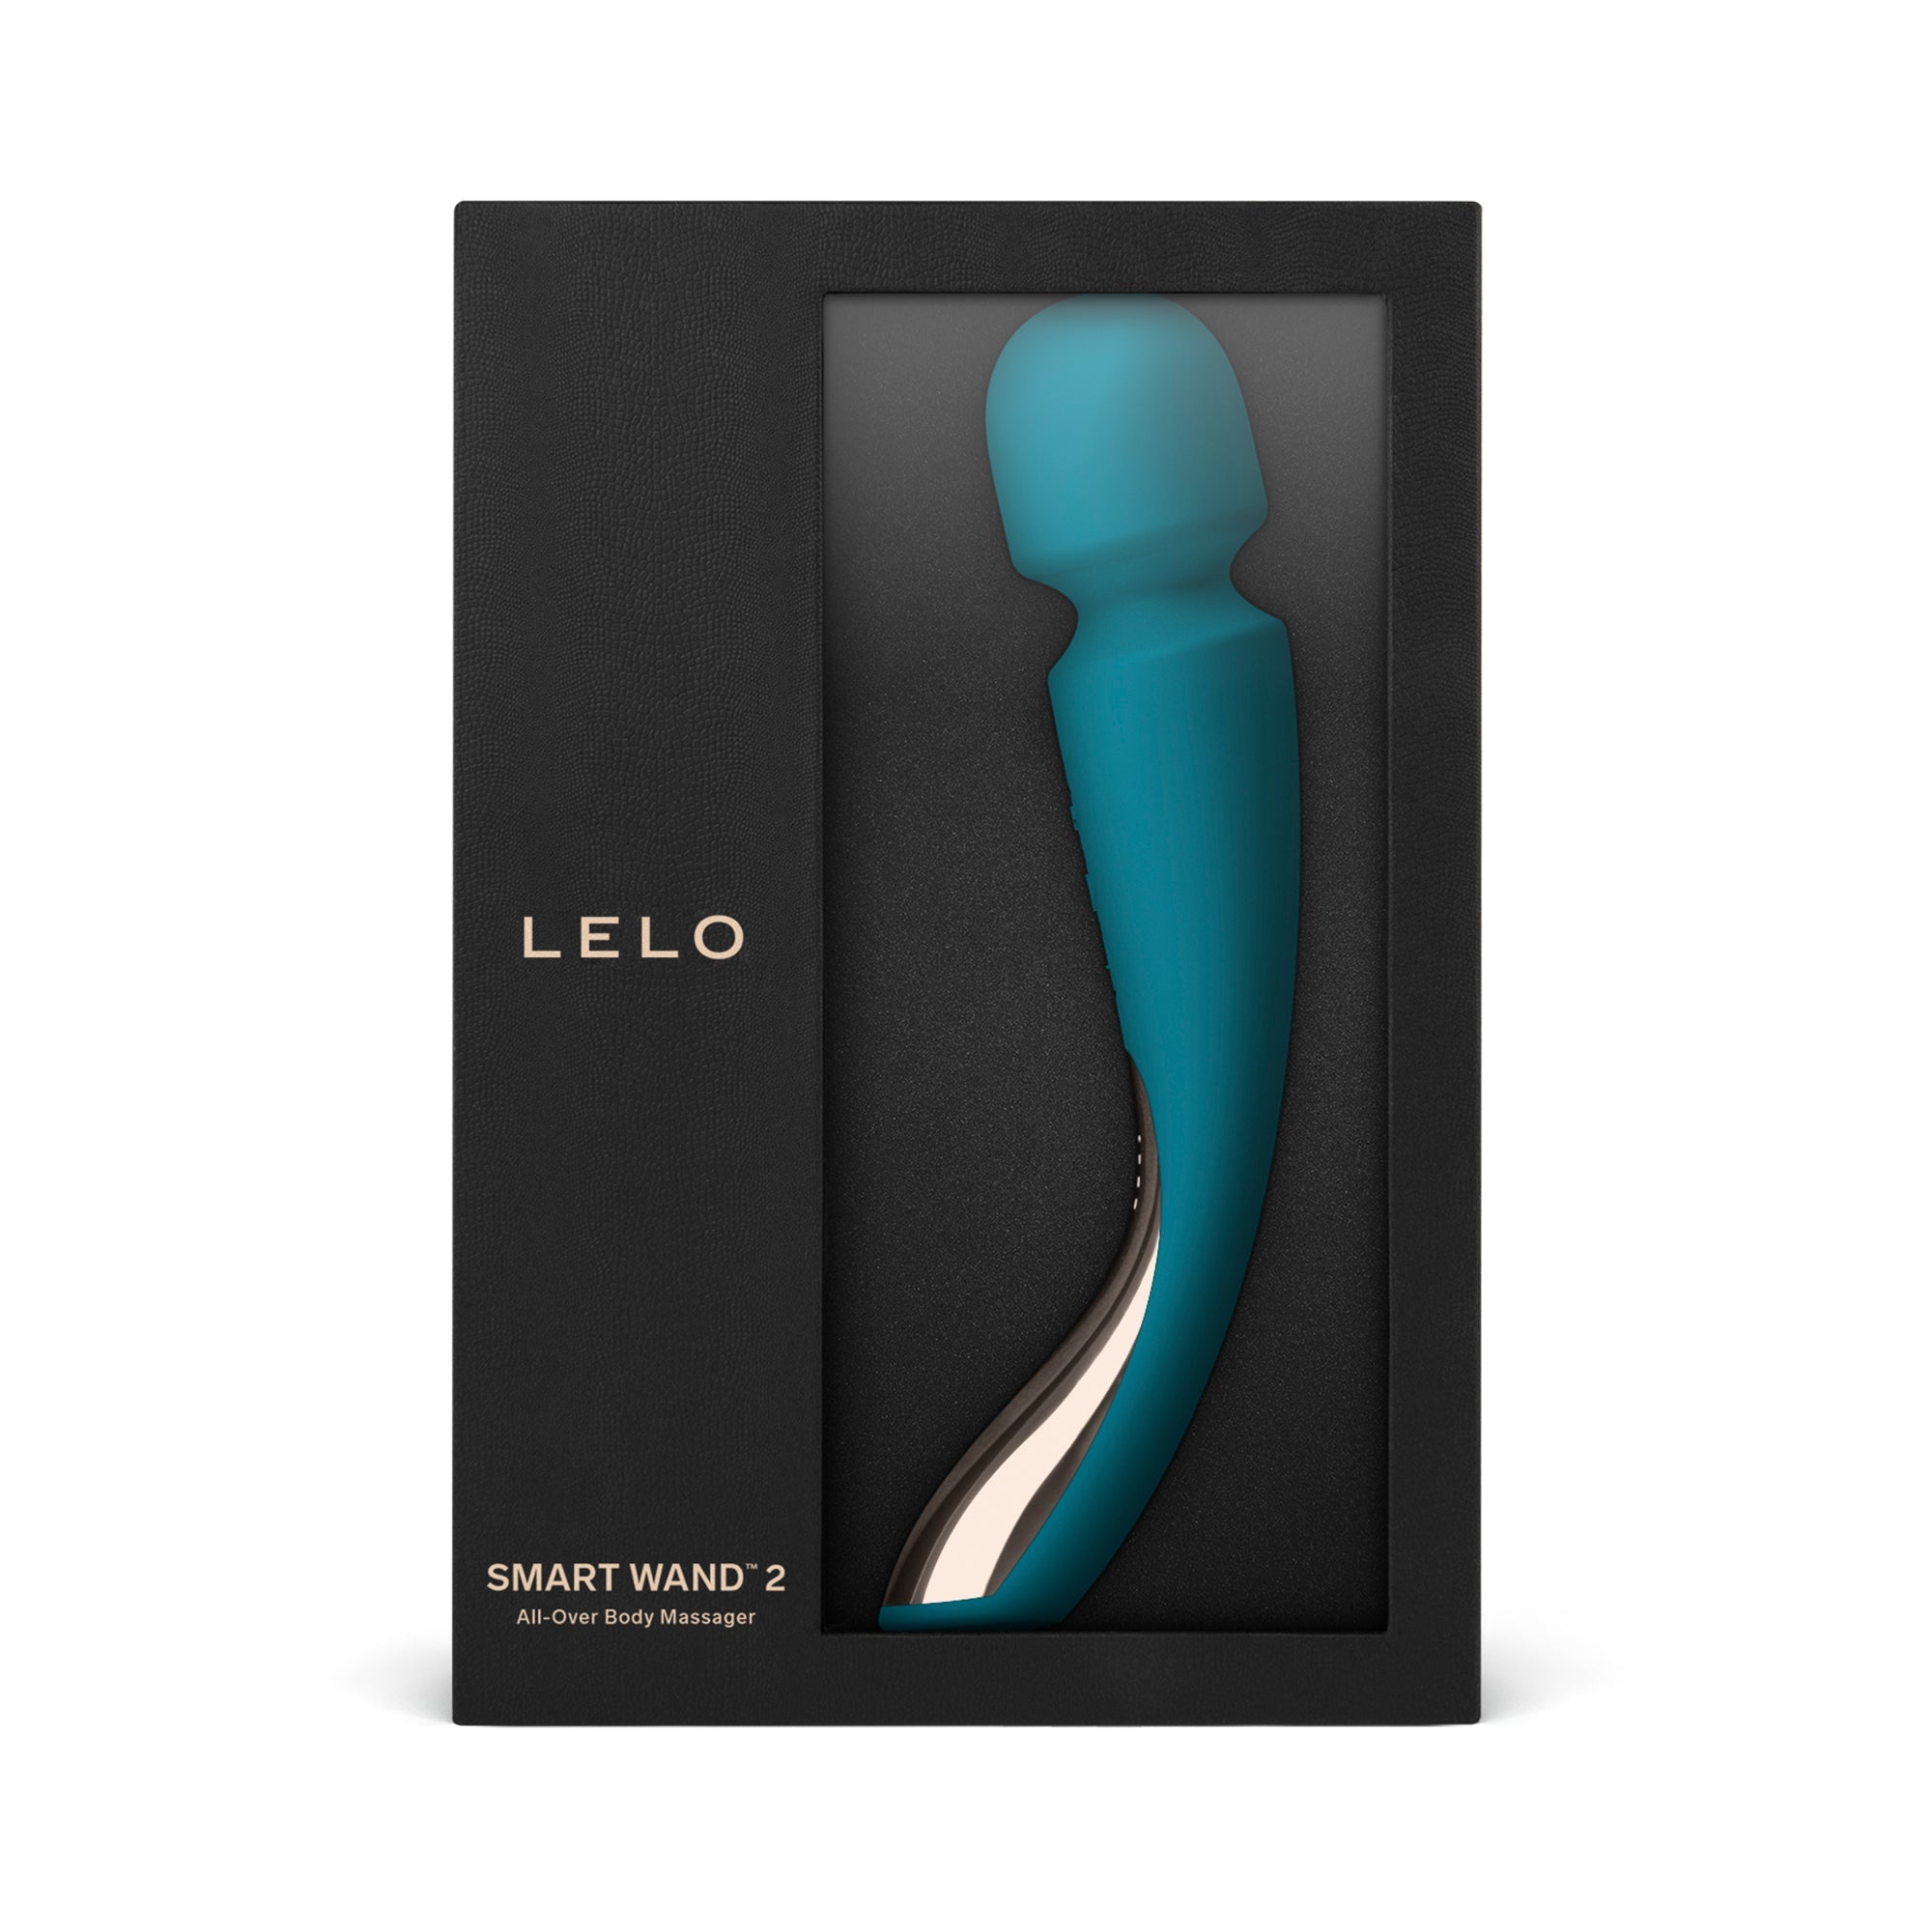 LELO Smart Wand-2 Massager-Ocean Blue color shown in black display packaging